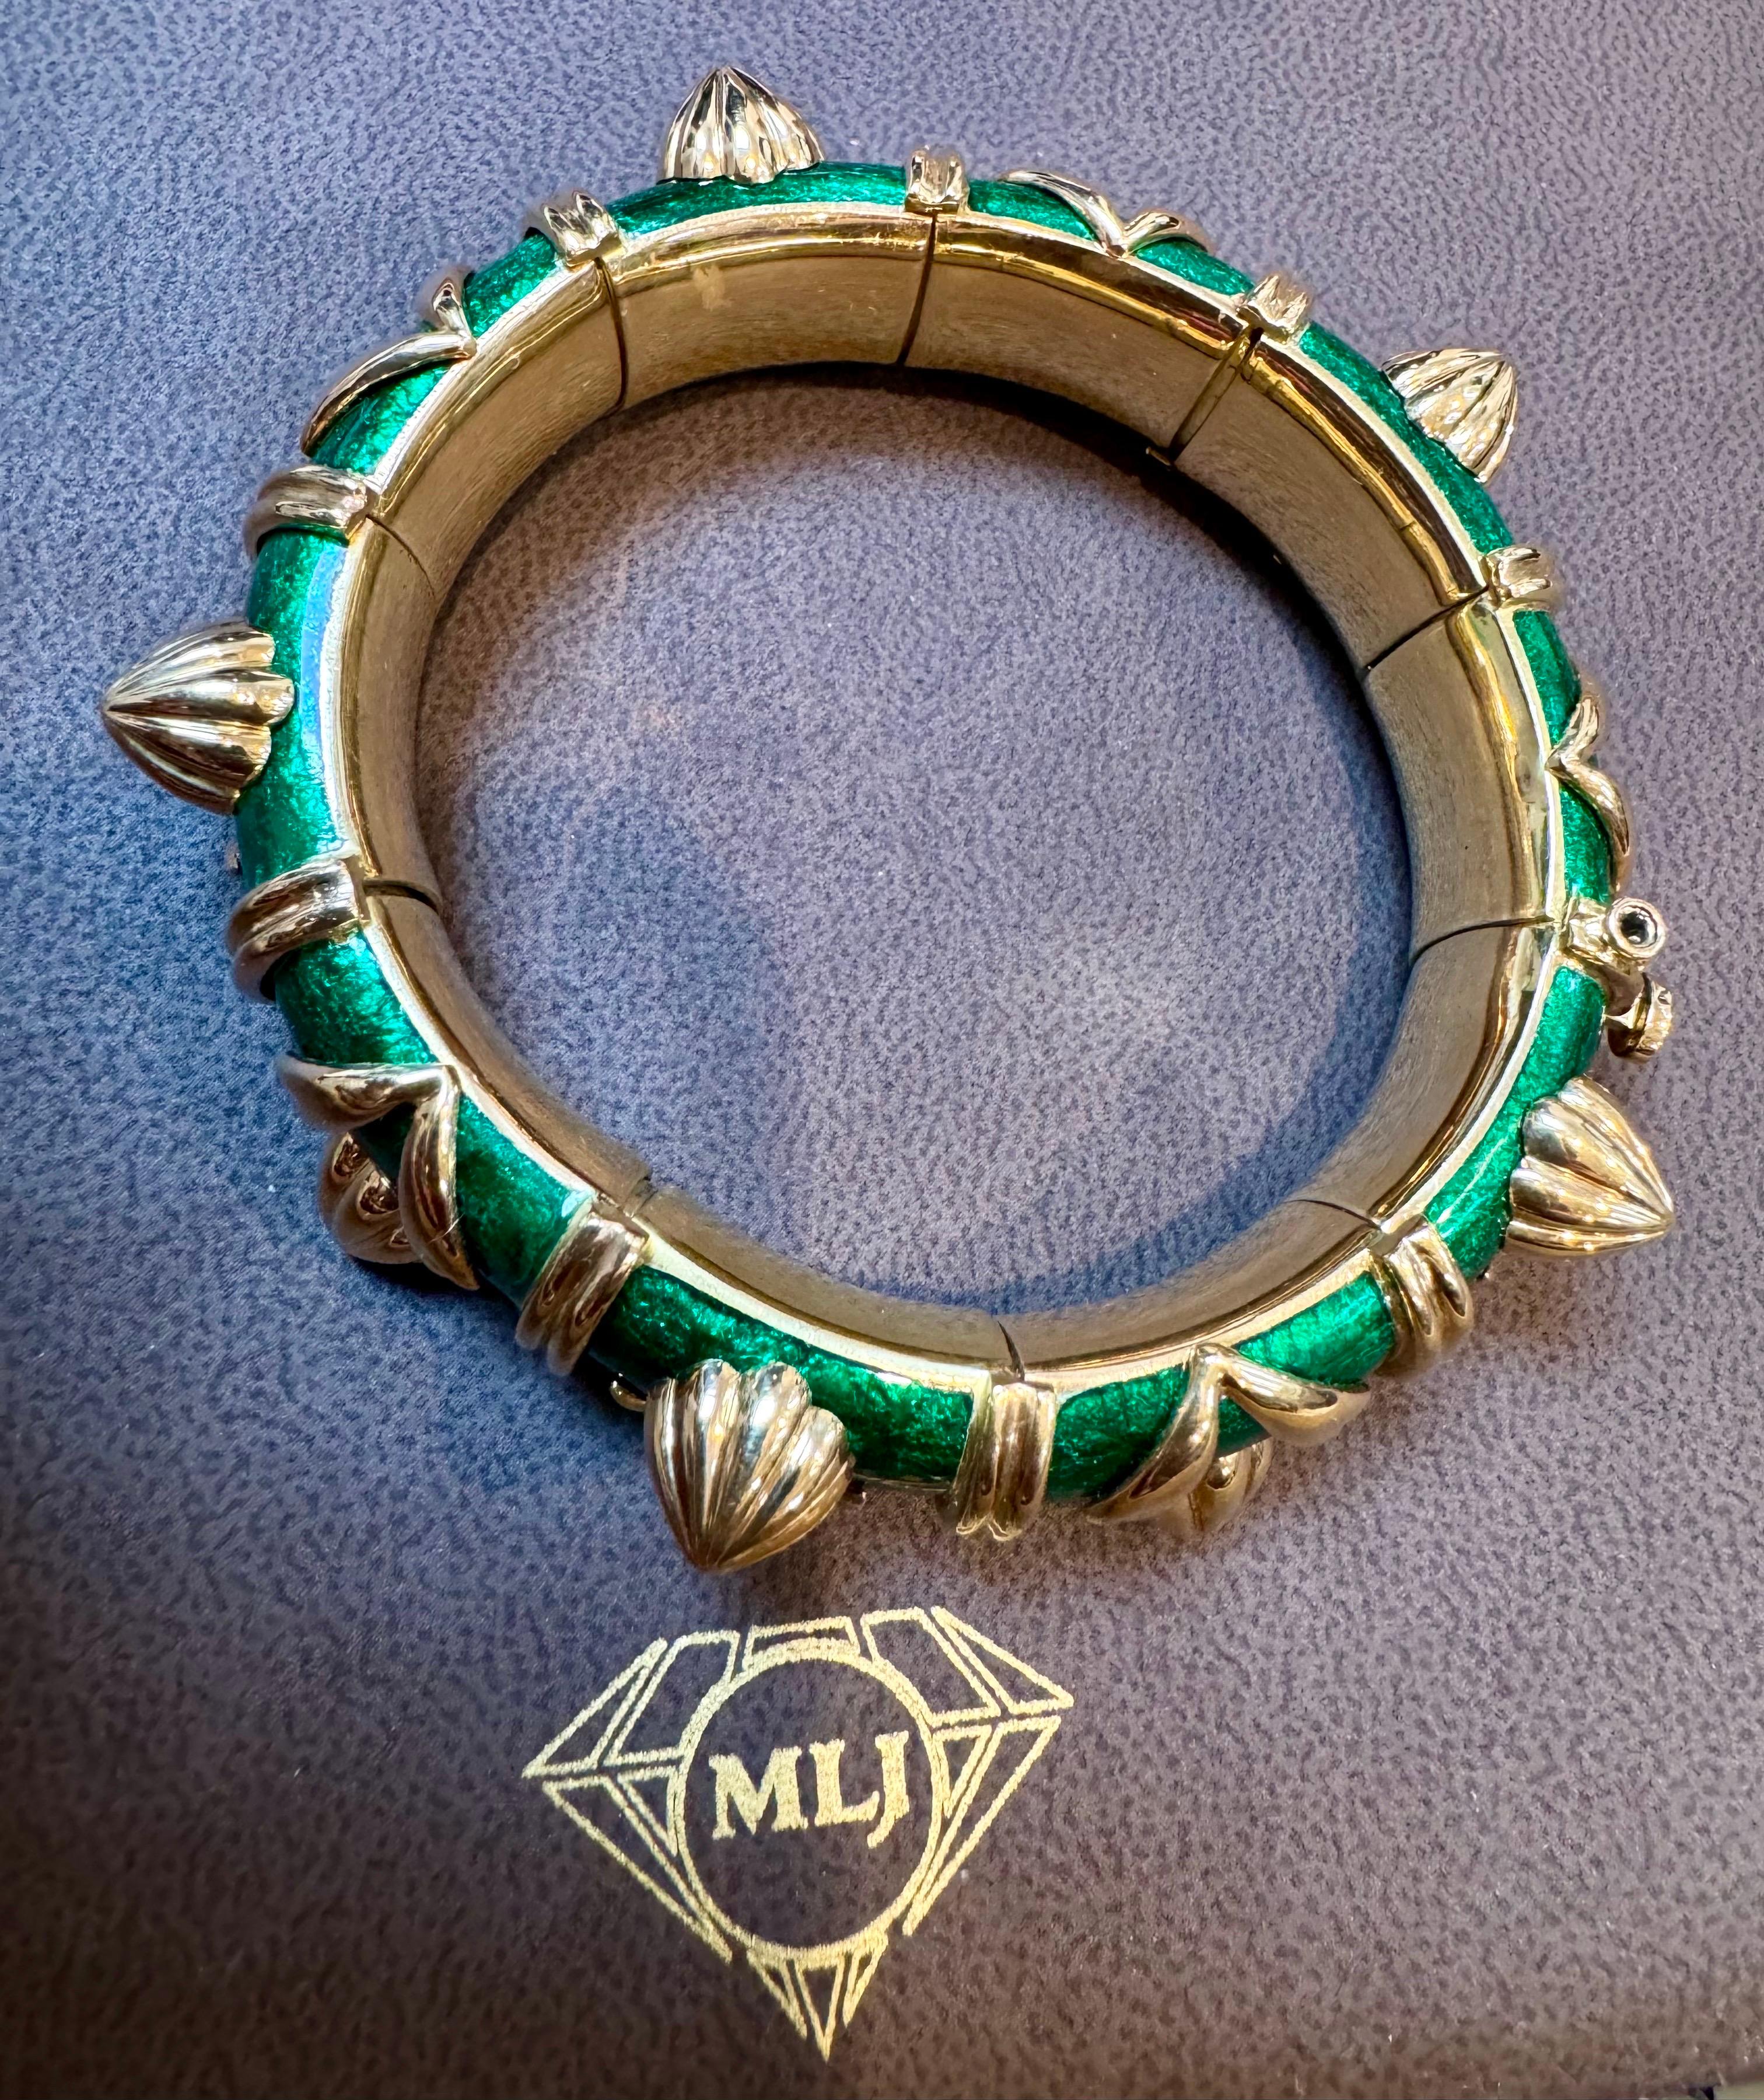 Tiffany & Co. Schlumberger Cone Losange Green Enamel Bangle Bracelet  138 gm 18K For Sale 4